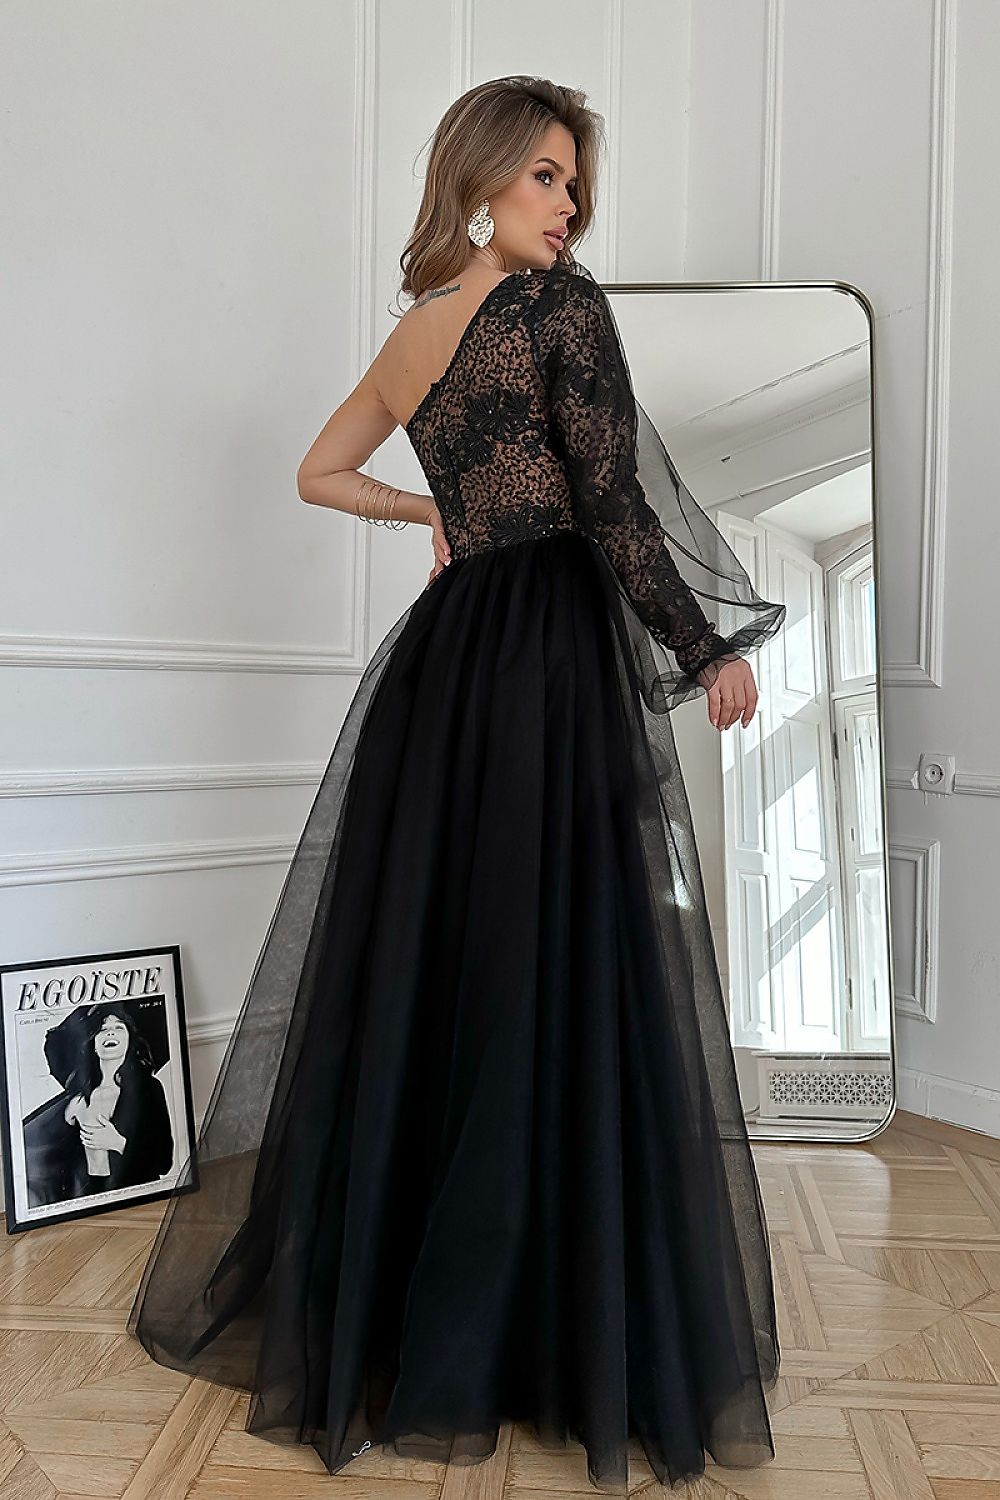 Long dress model 190496 Black by Bicotone - Long Dresses